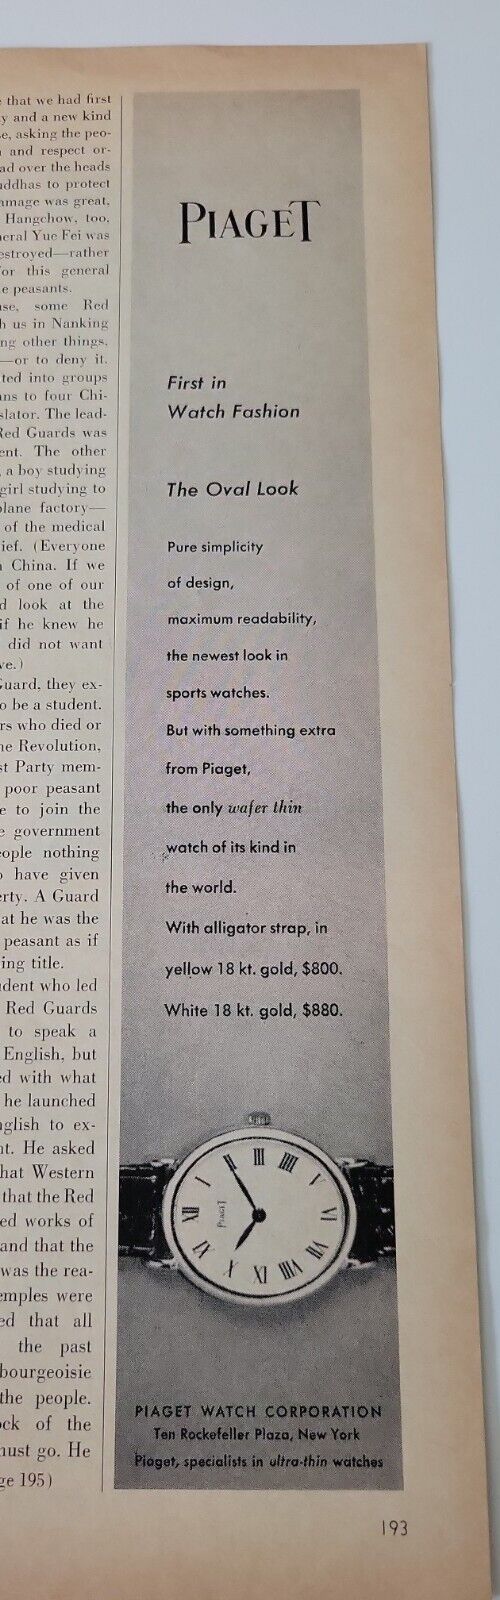 1967 Piaget watch Corporation oval watch alligator strap vintage ad